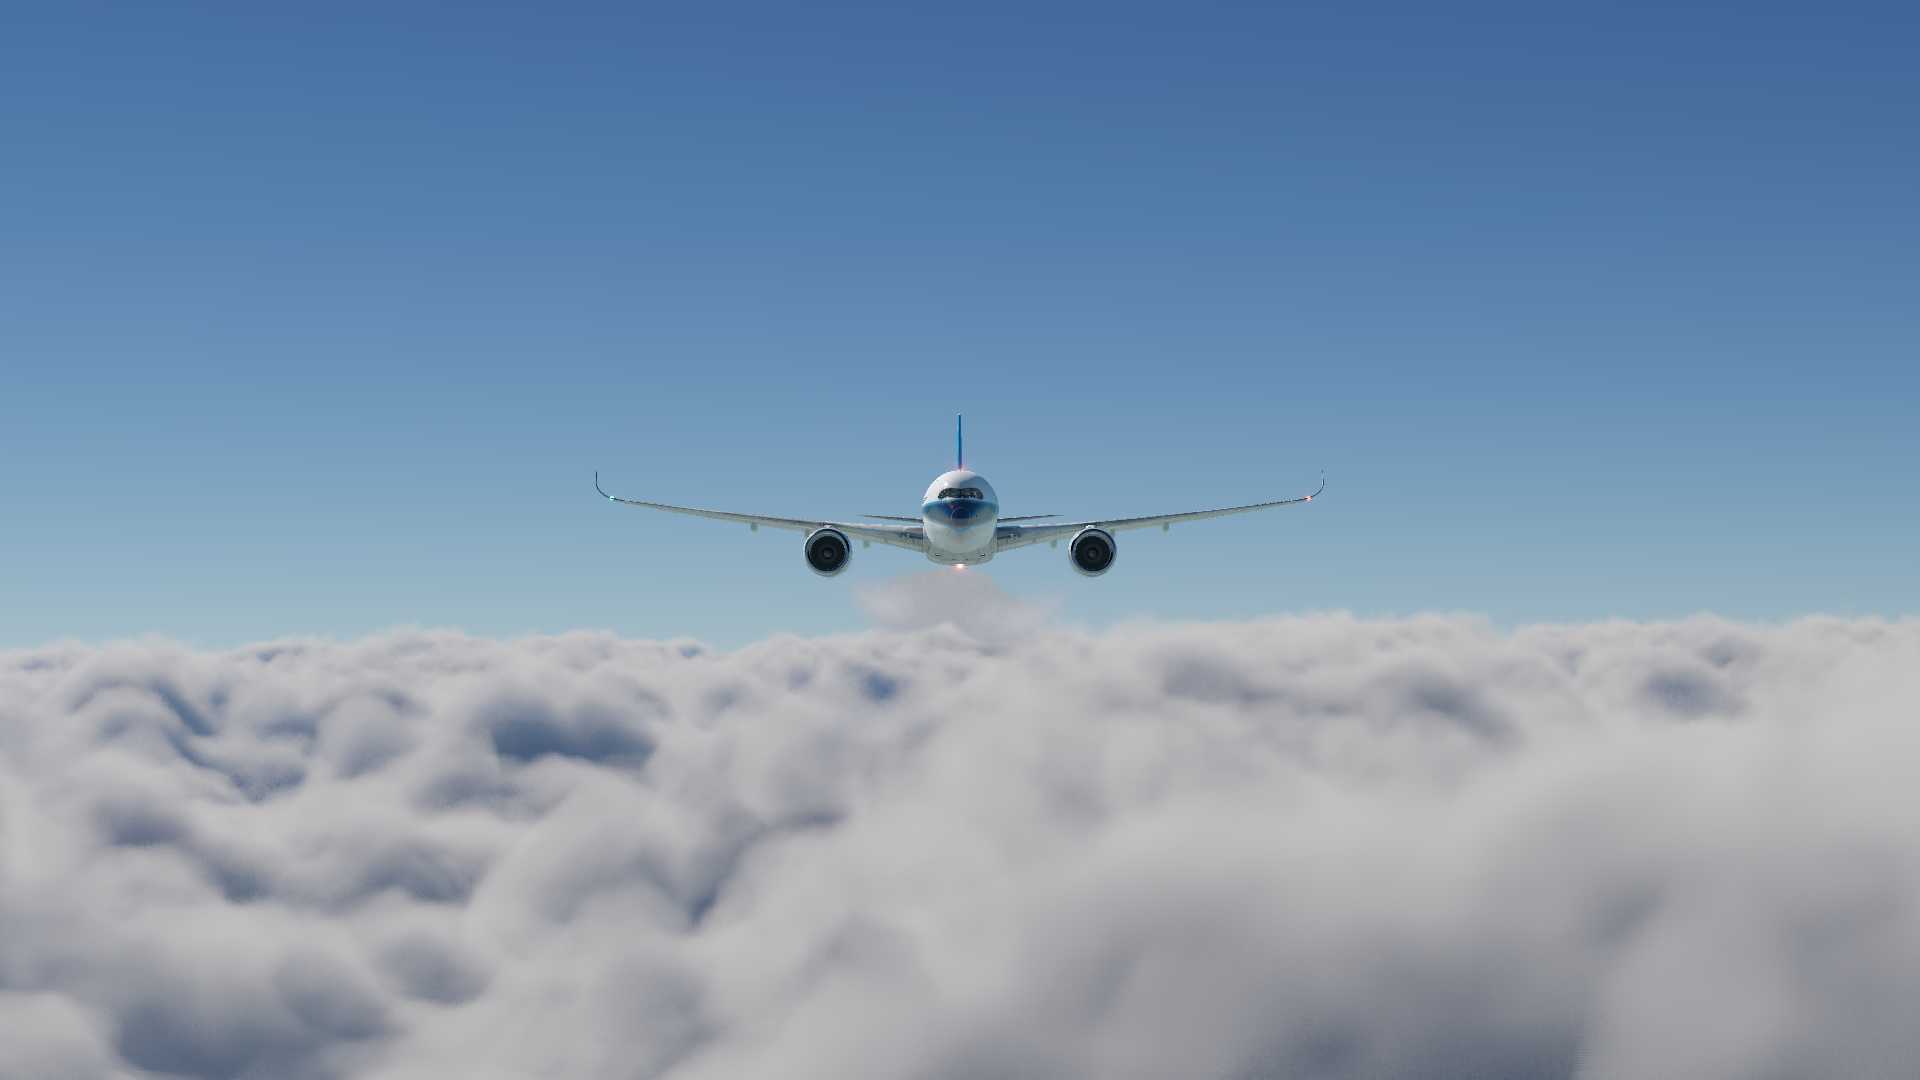 【X-Plane 11】航线上的风景-2817 